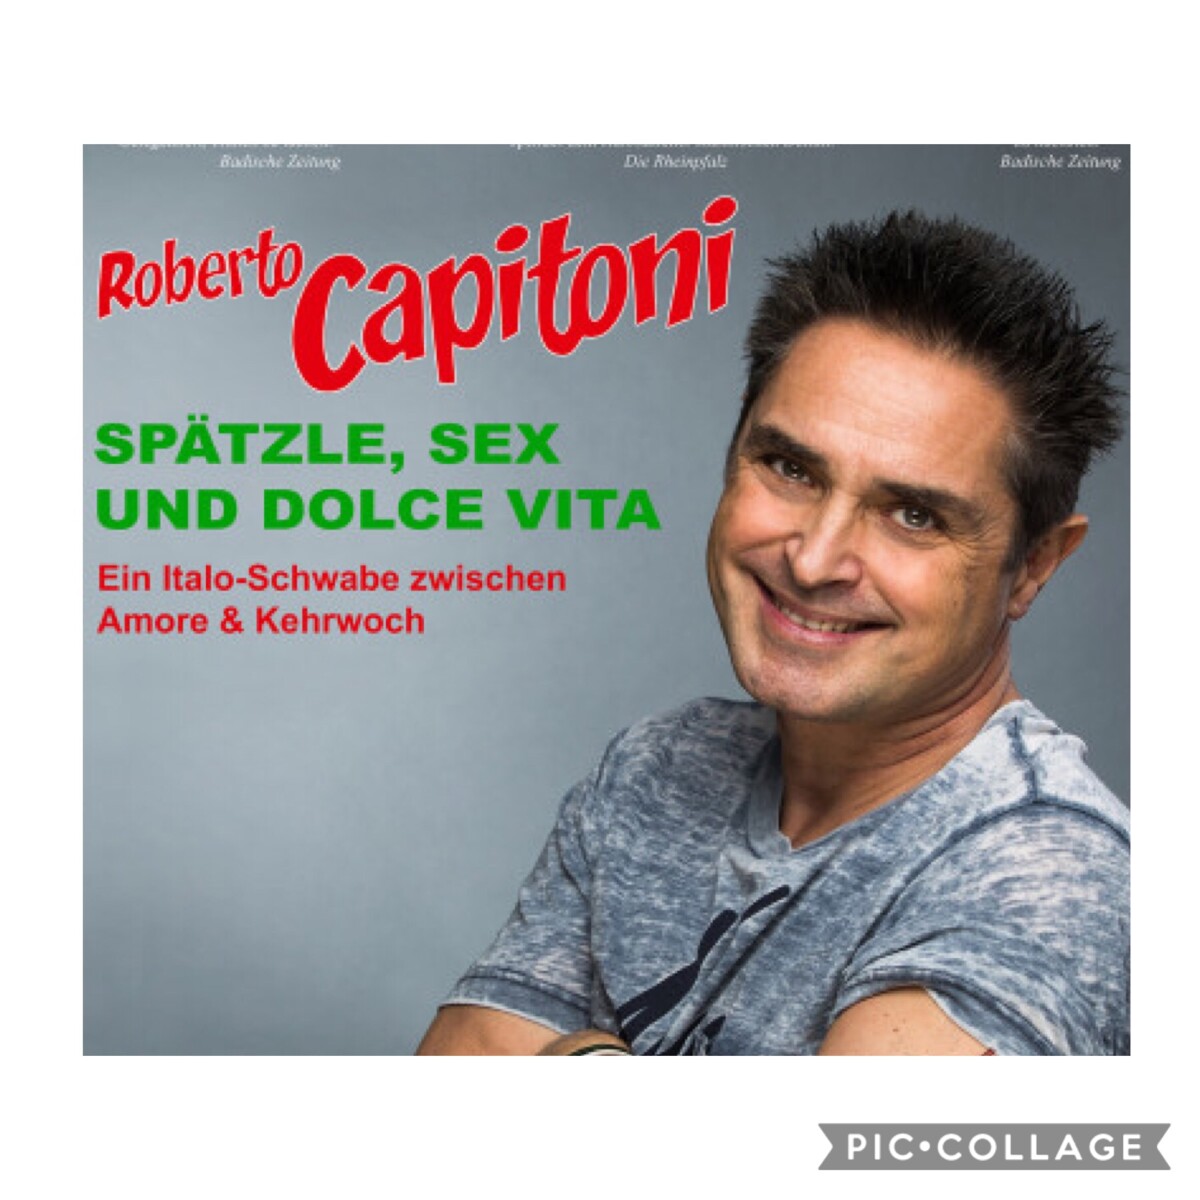 Roberto Capitoni